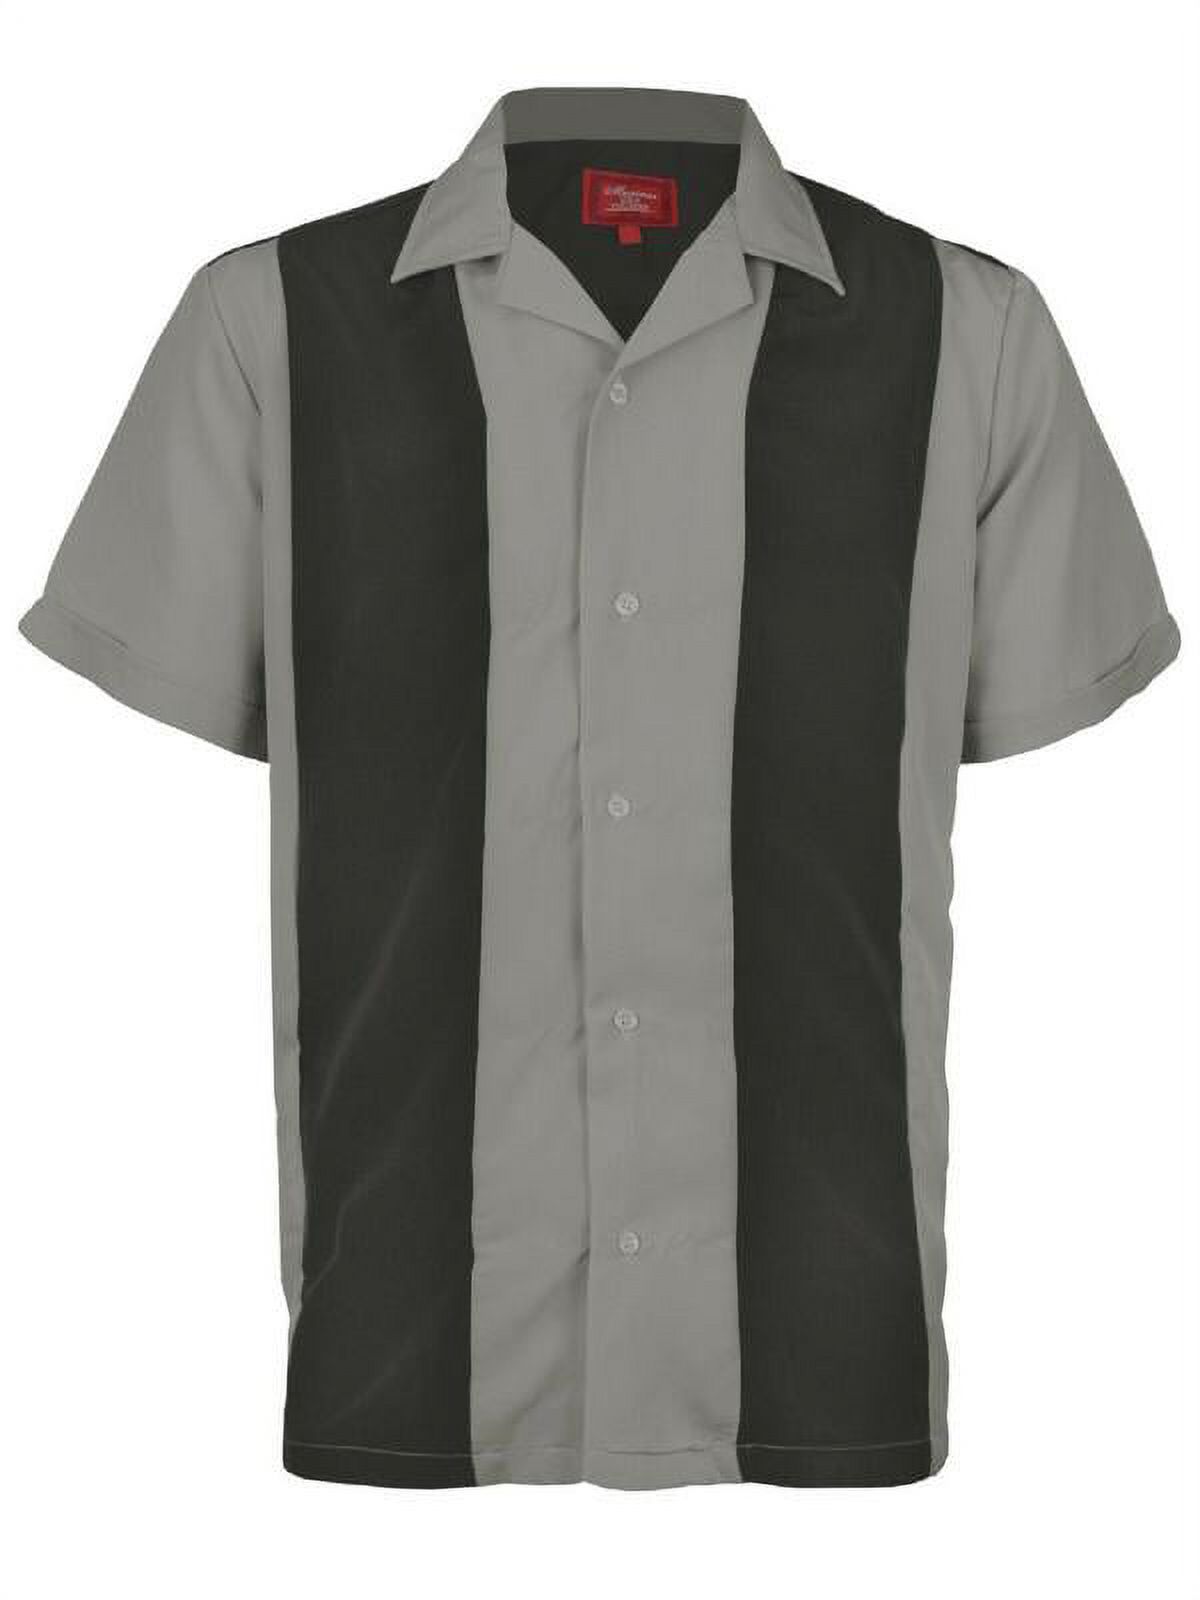 Men's Retro Two Tone Bowling Dress Shirt Dark Grey Stripe / Light Grey XL - image 1 of 2